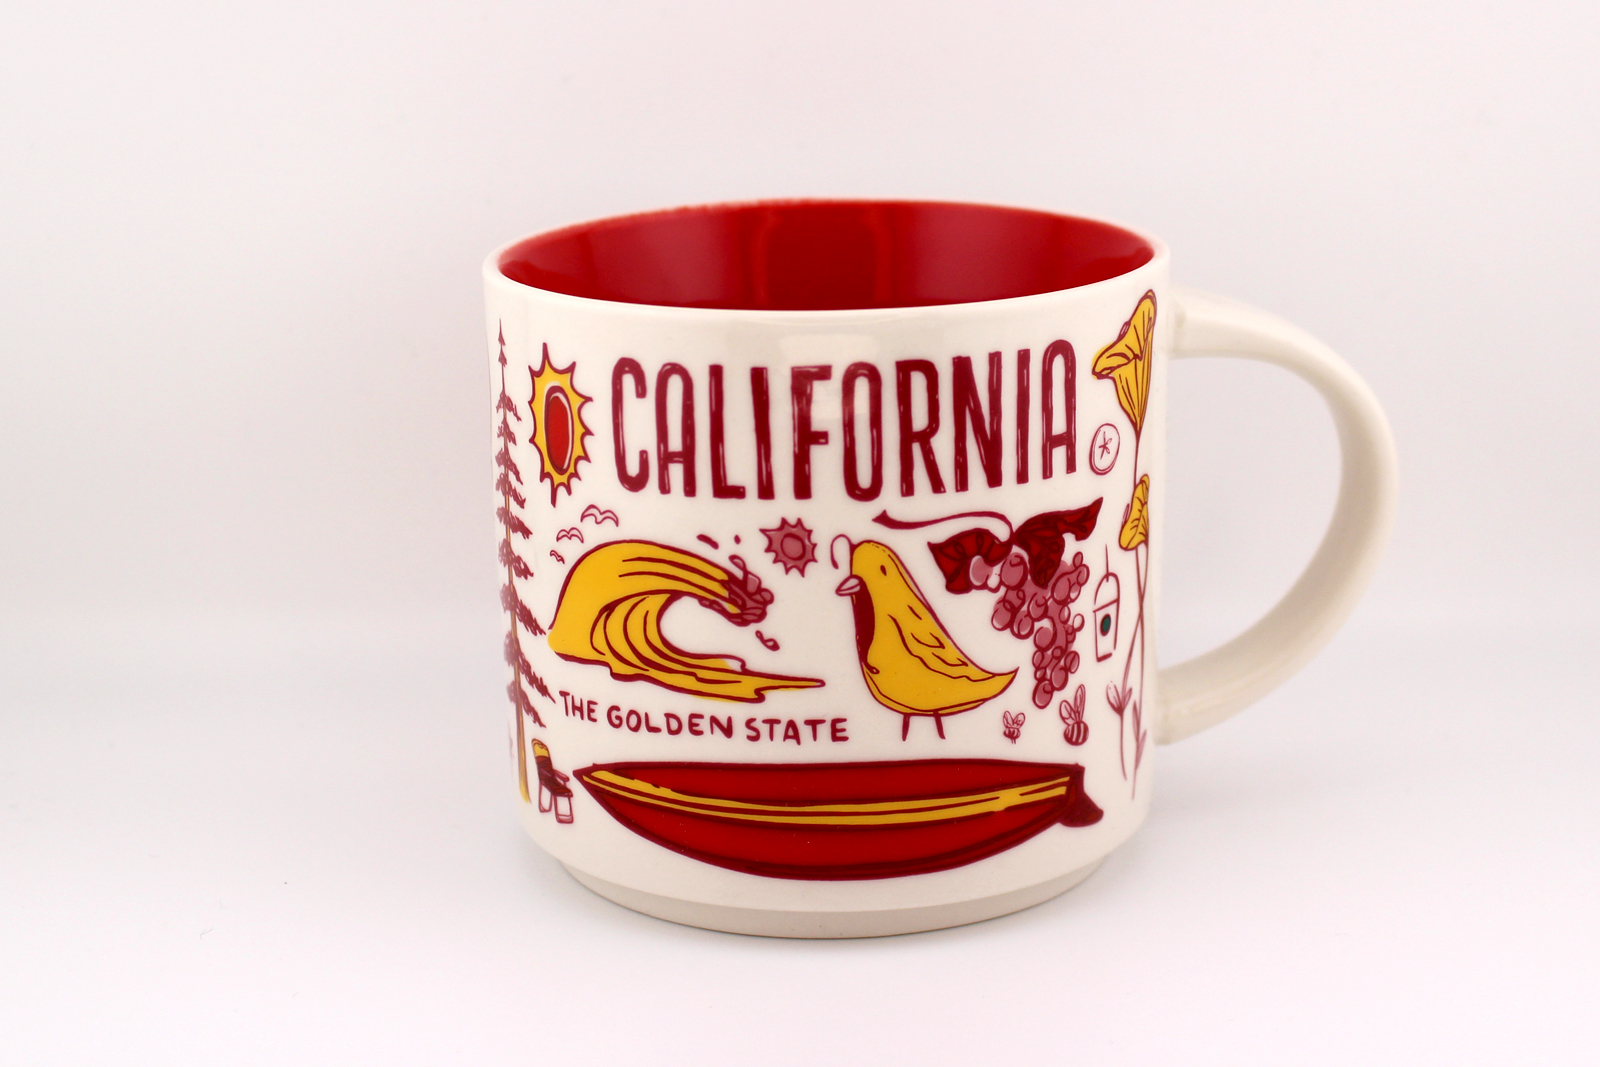 California Mug: Starbucks Been There Series